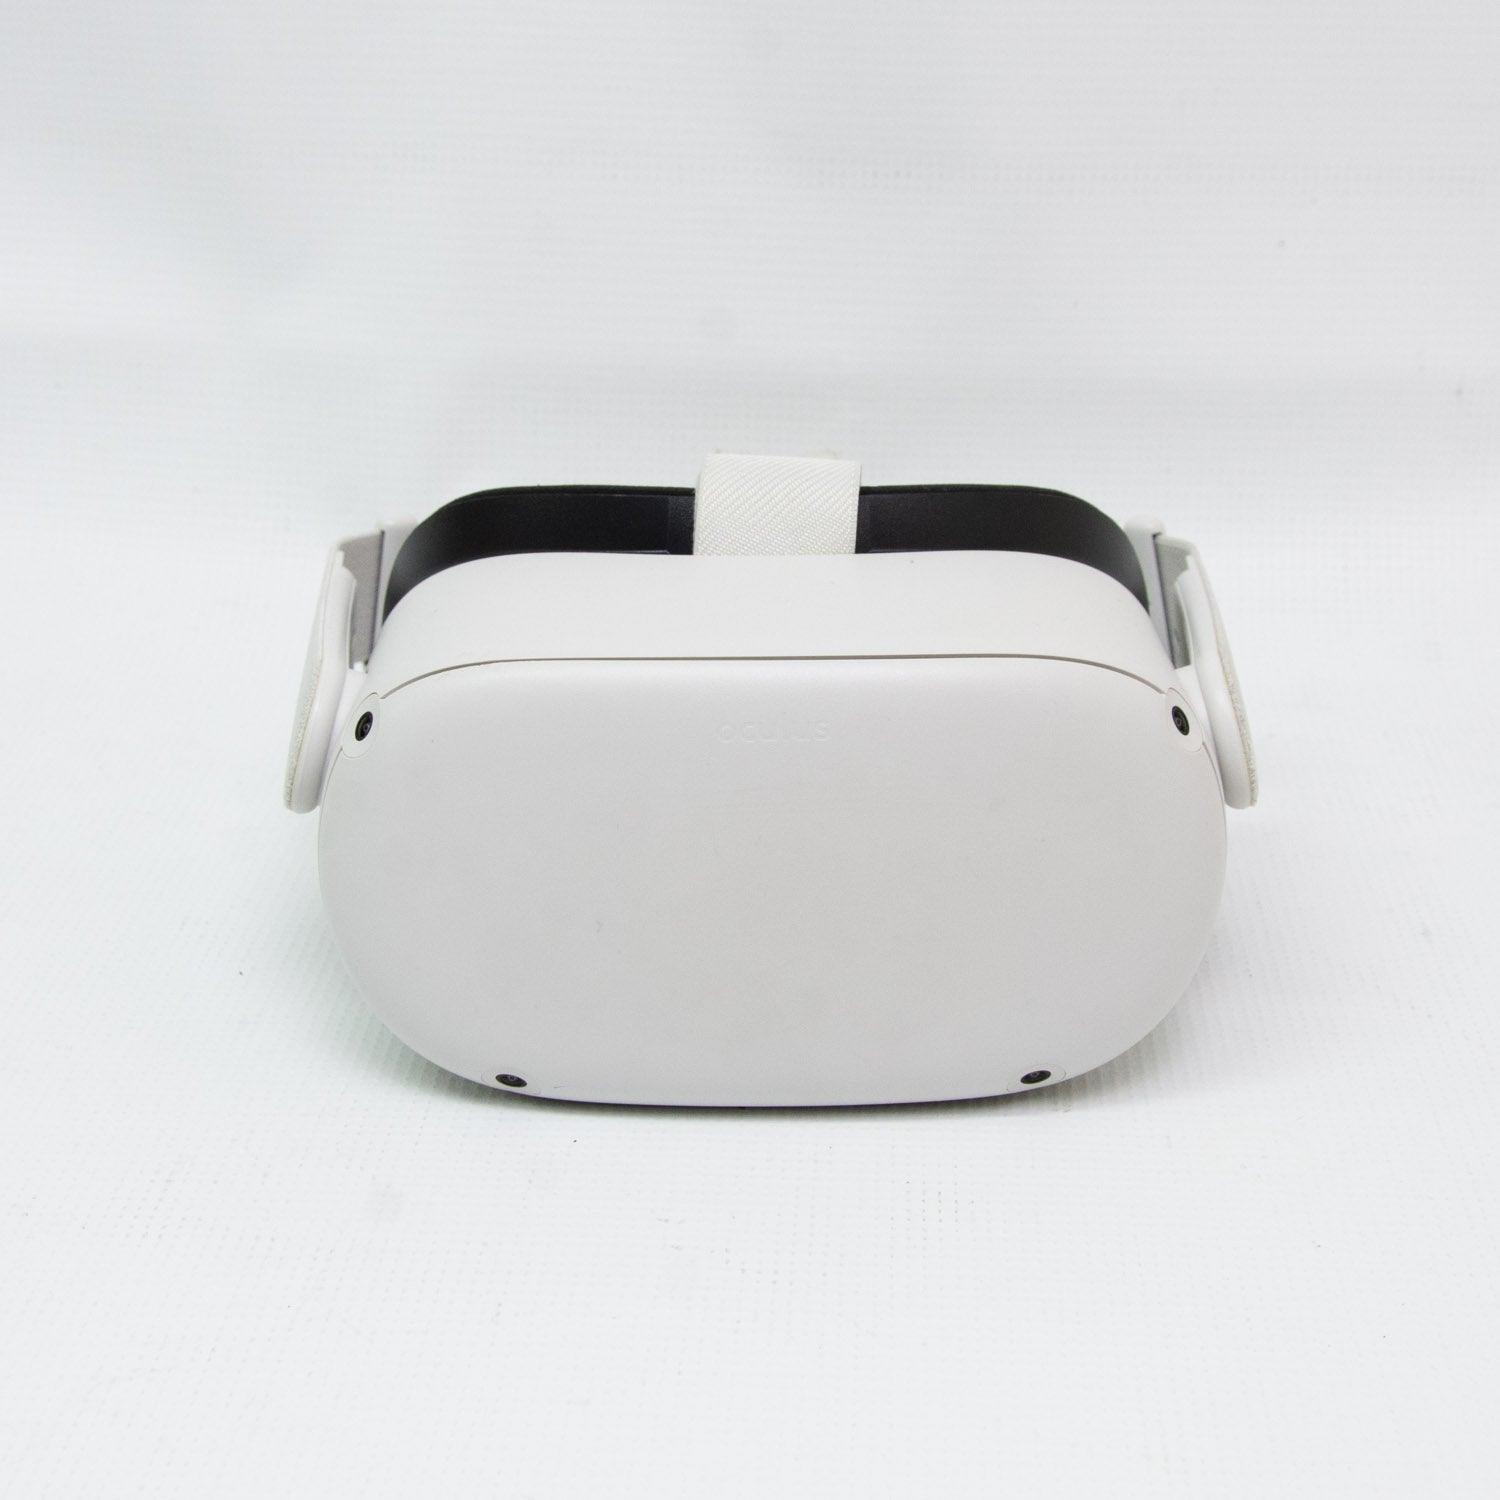 Oculus Quest 2 128 GB VR Headset - KW49CM - ipawnishop.com